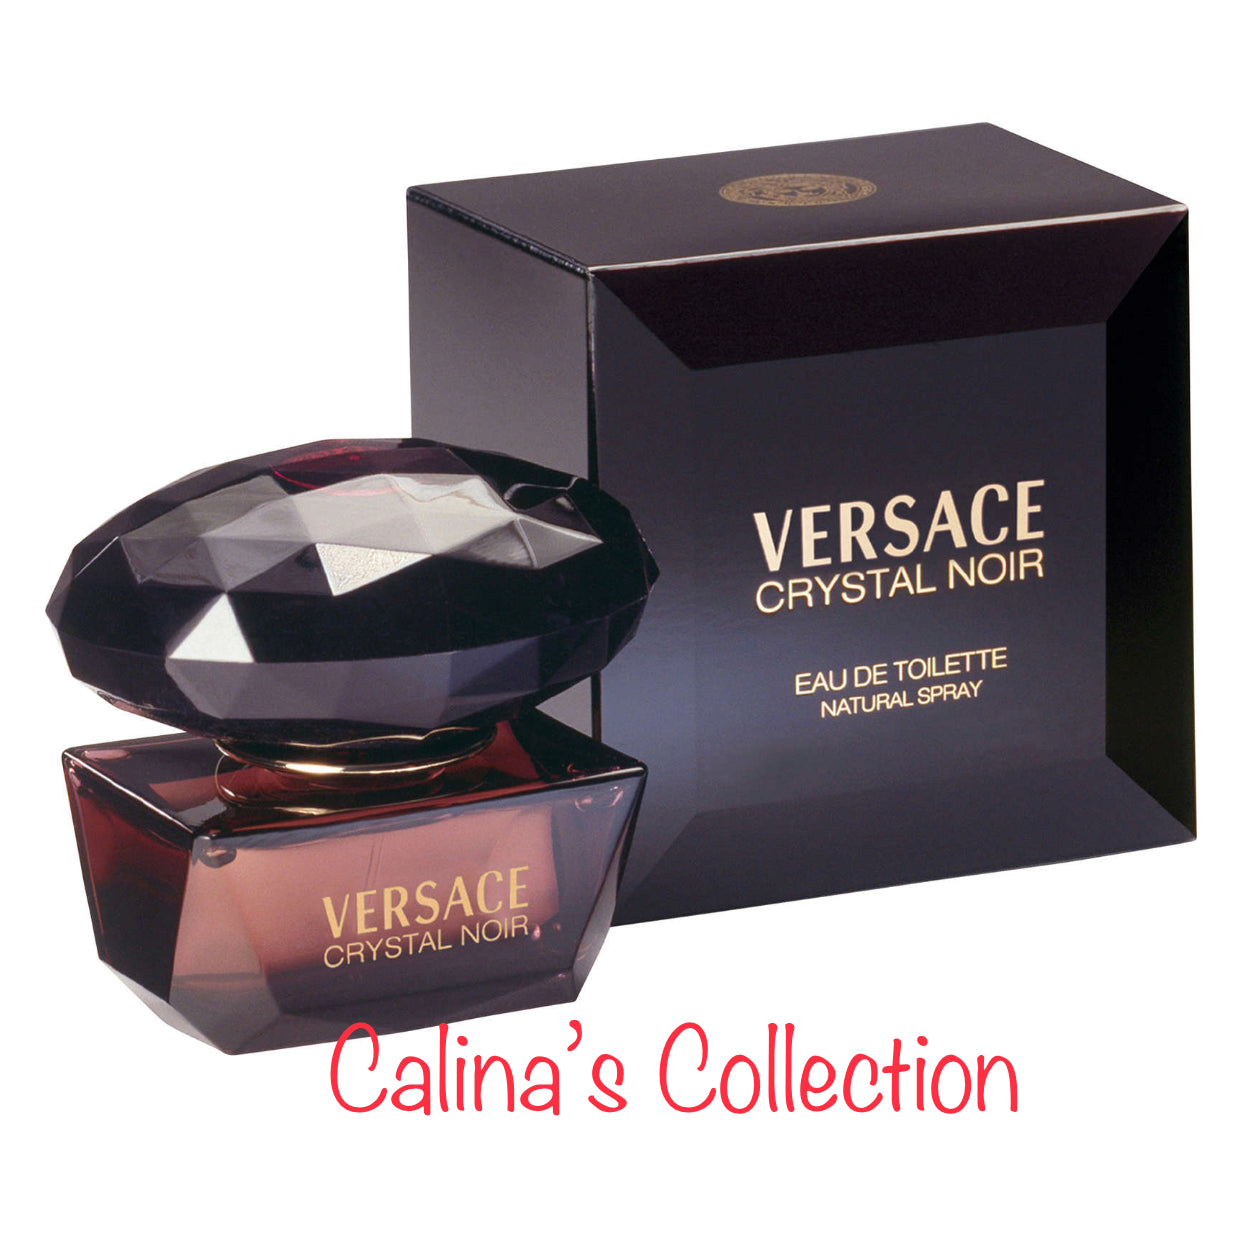 Crystalline туалетная вода. Versace - Crystal Noir EDT 90ml. Духи Versace Crystal Noir. Versace Crystal Noir EDT 30 ml. 50 Мл духов Versace Crystal Noir.